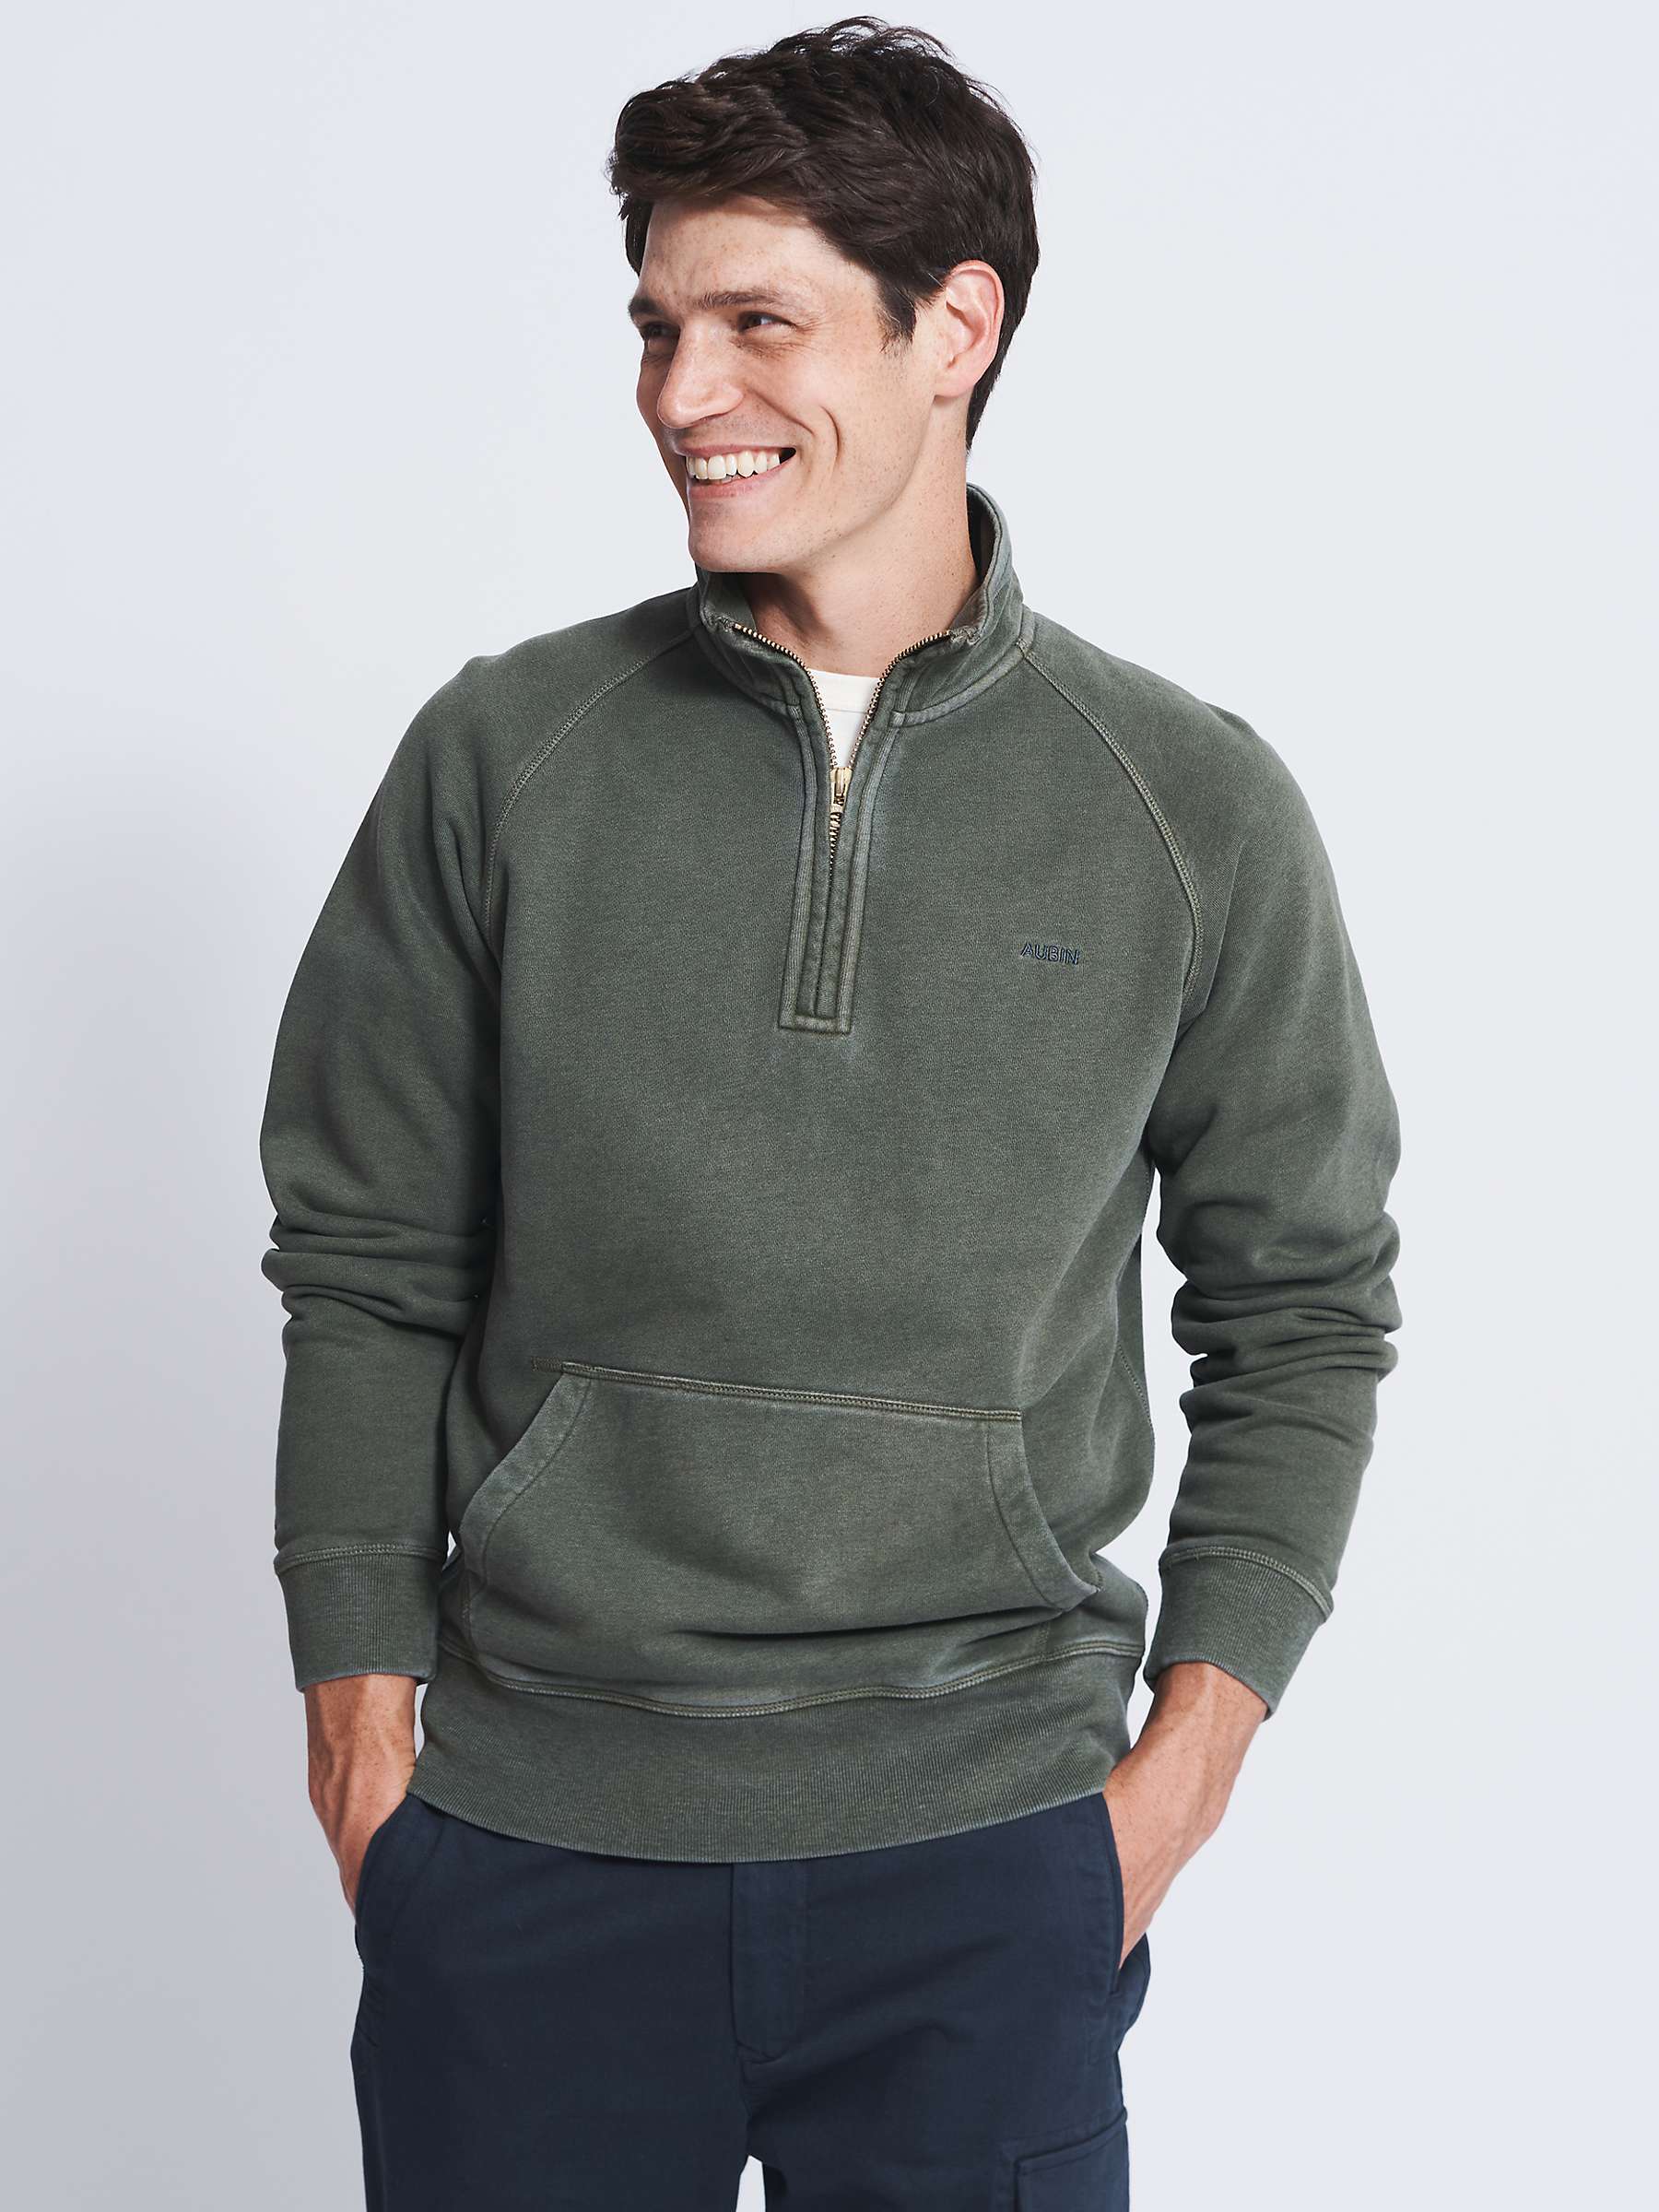 Aubin Provost Half-Zip Sweatshirt, Khaki at John Lewis & Partners